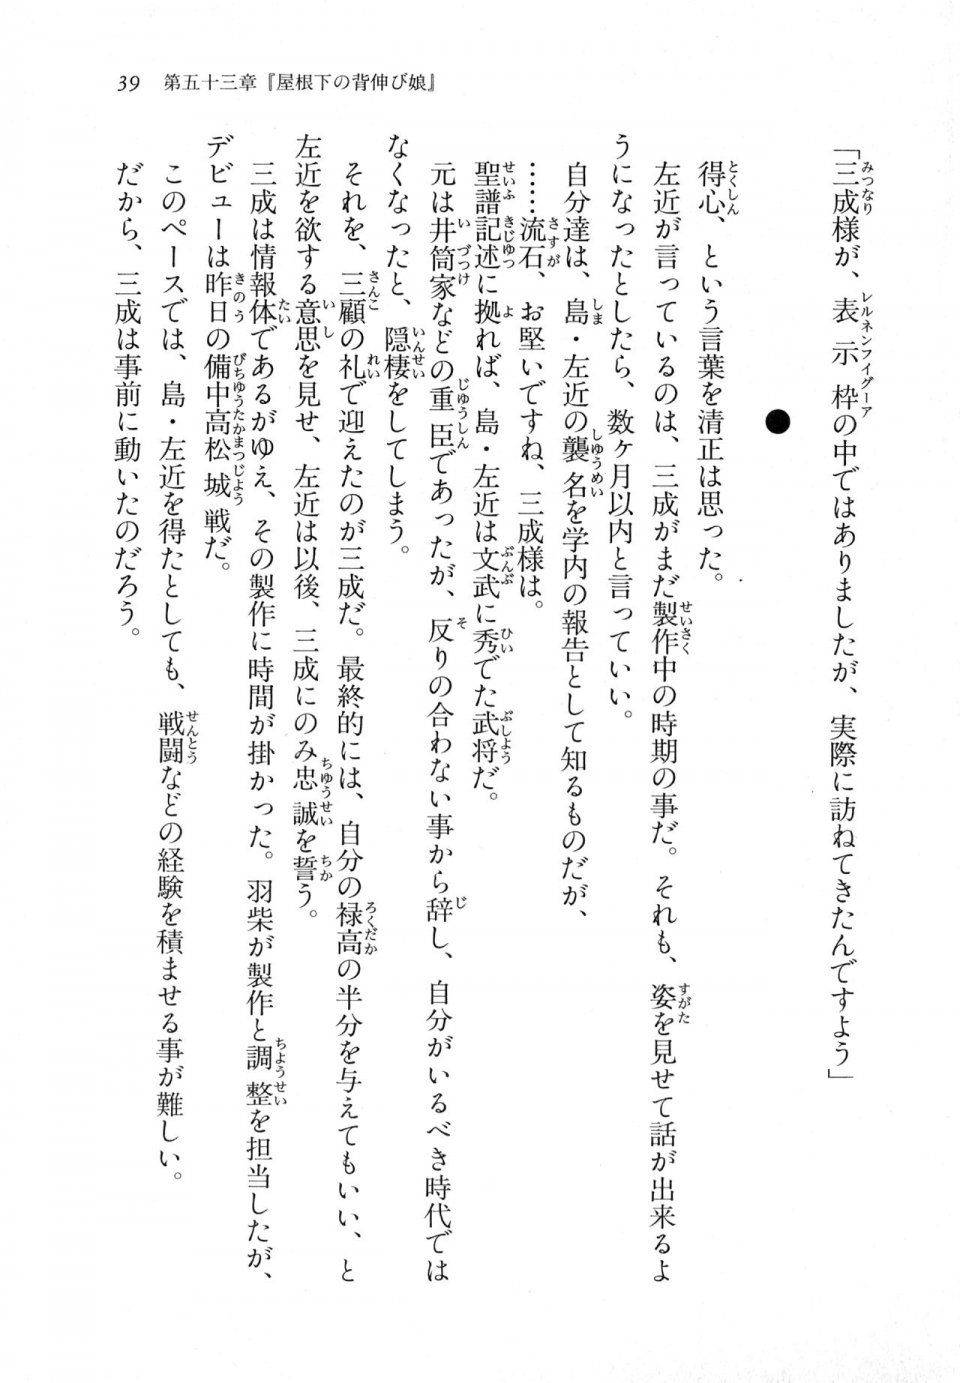 Kyoukai Senjou no Horizon LN Vol 18(7C) Part 1 - Photo #39